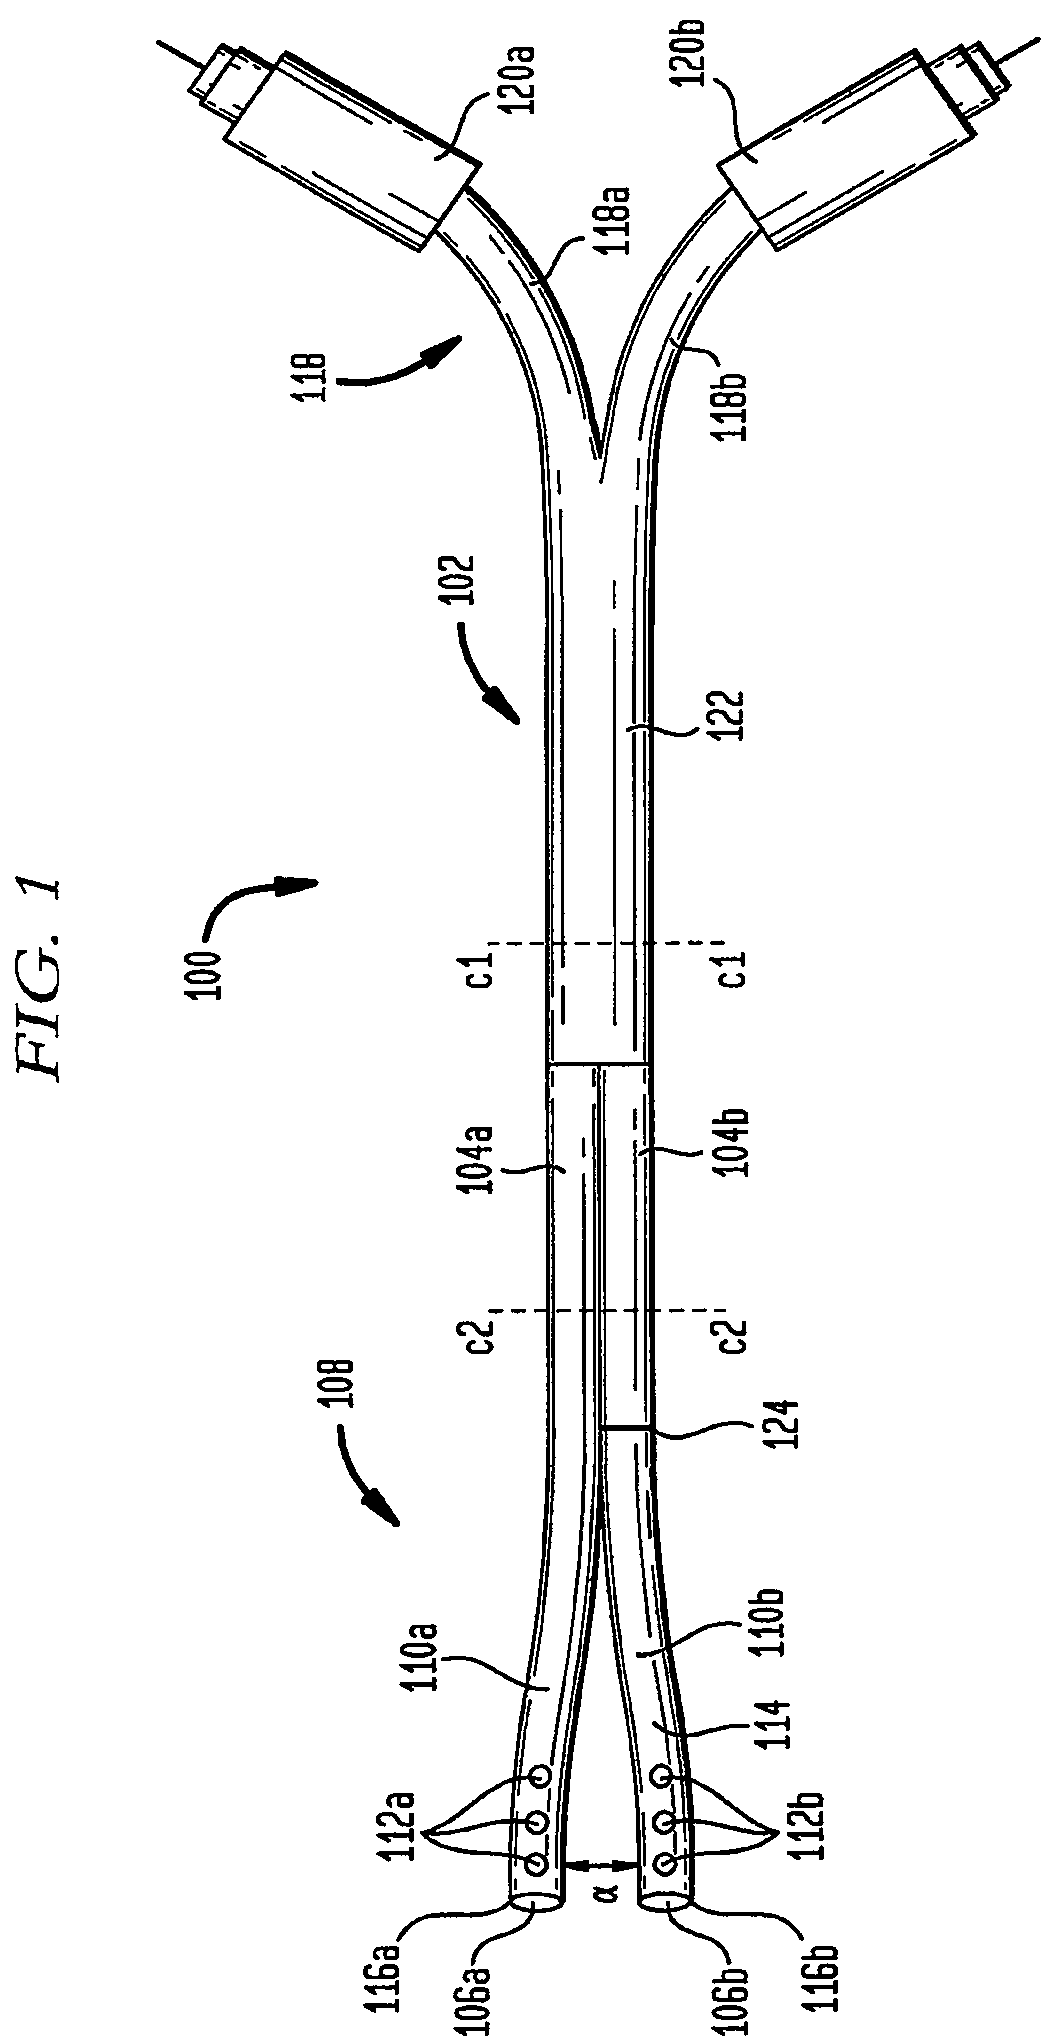 Manufacture of split tip catheters